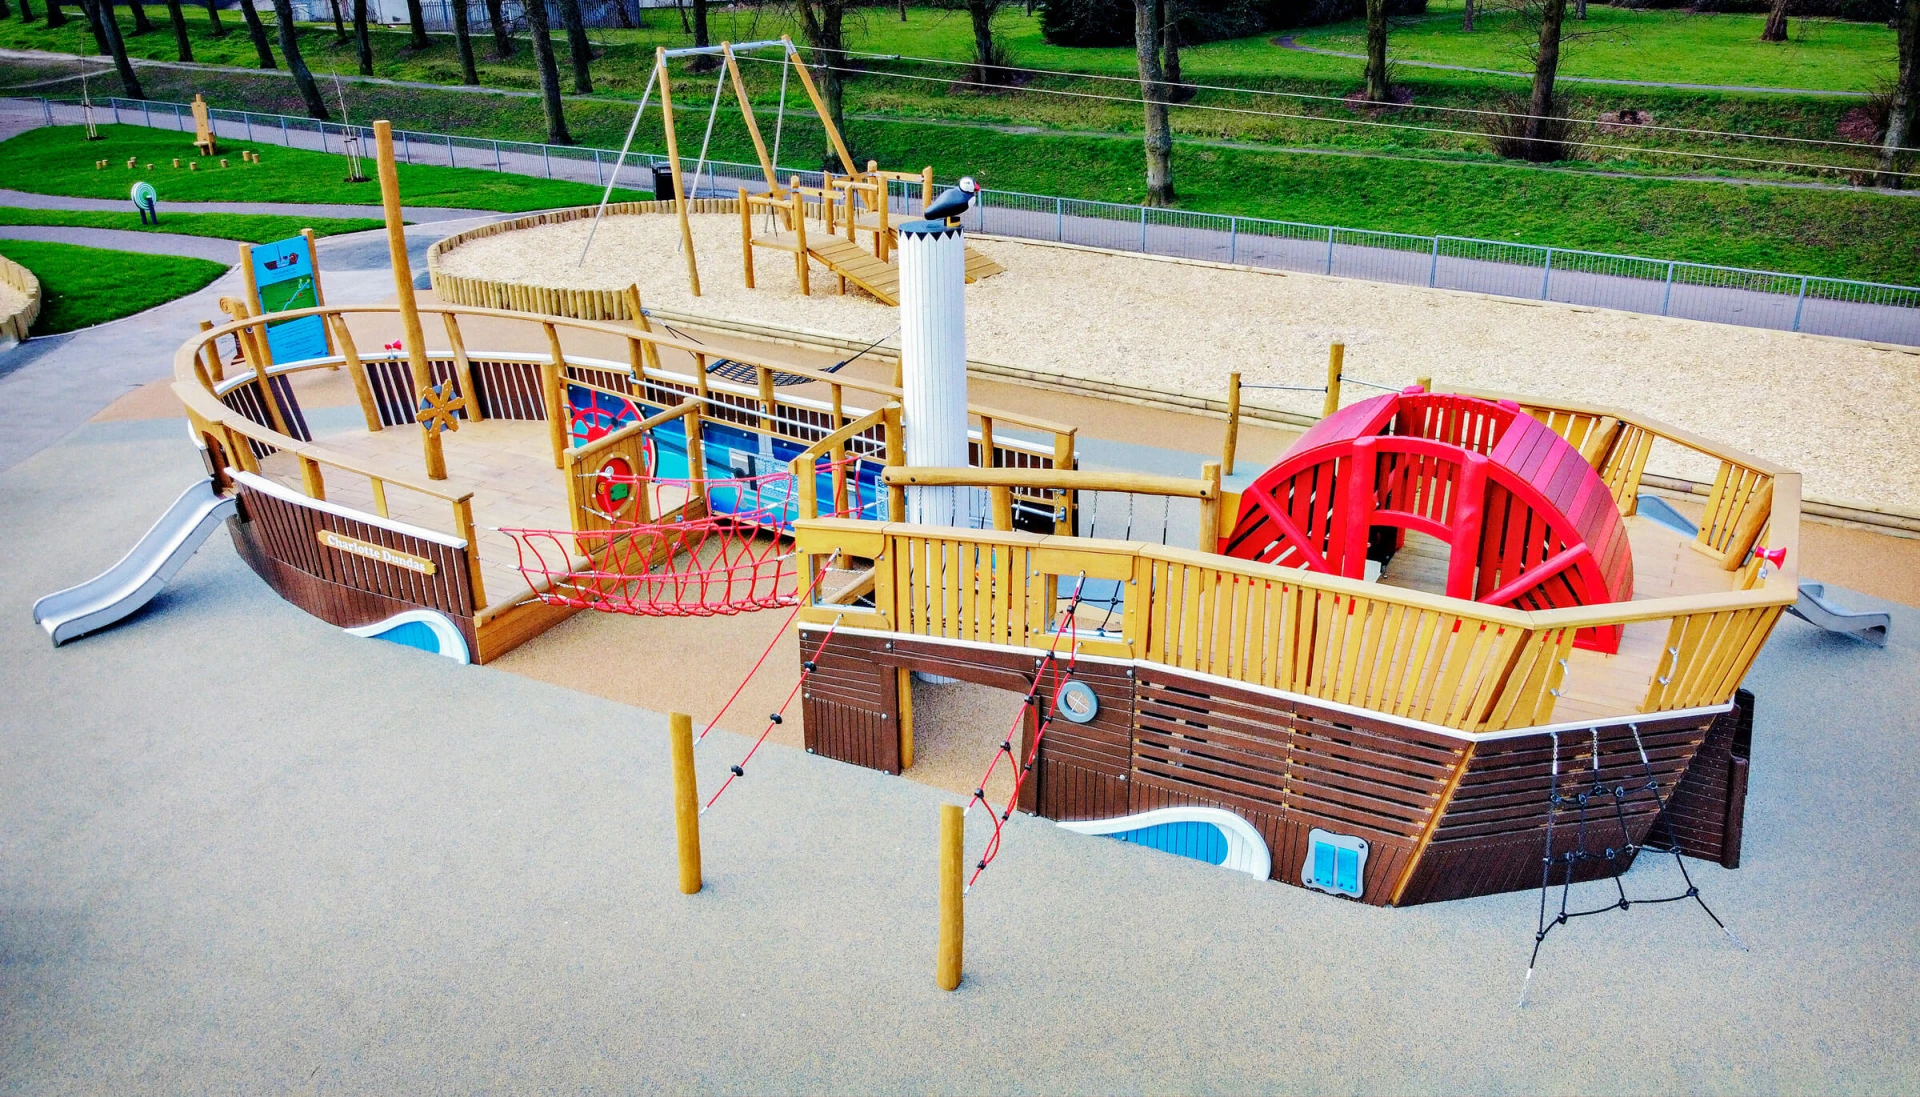 Playground ship at Zetland Park in Scotland 